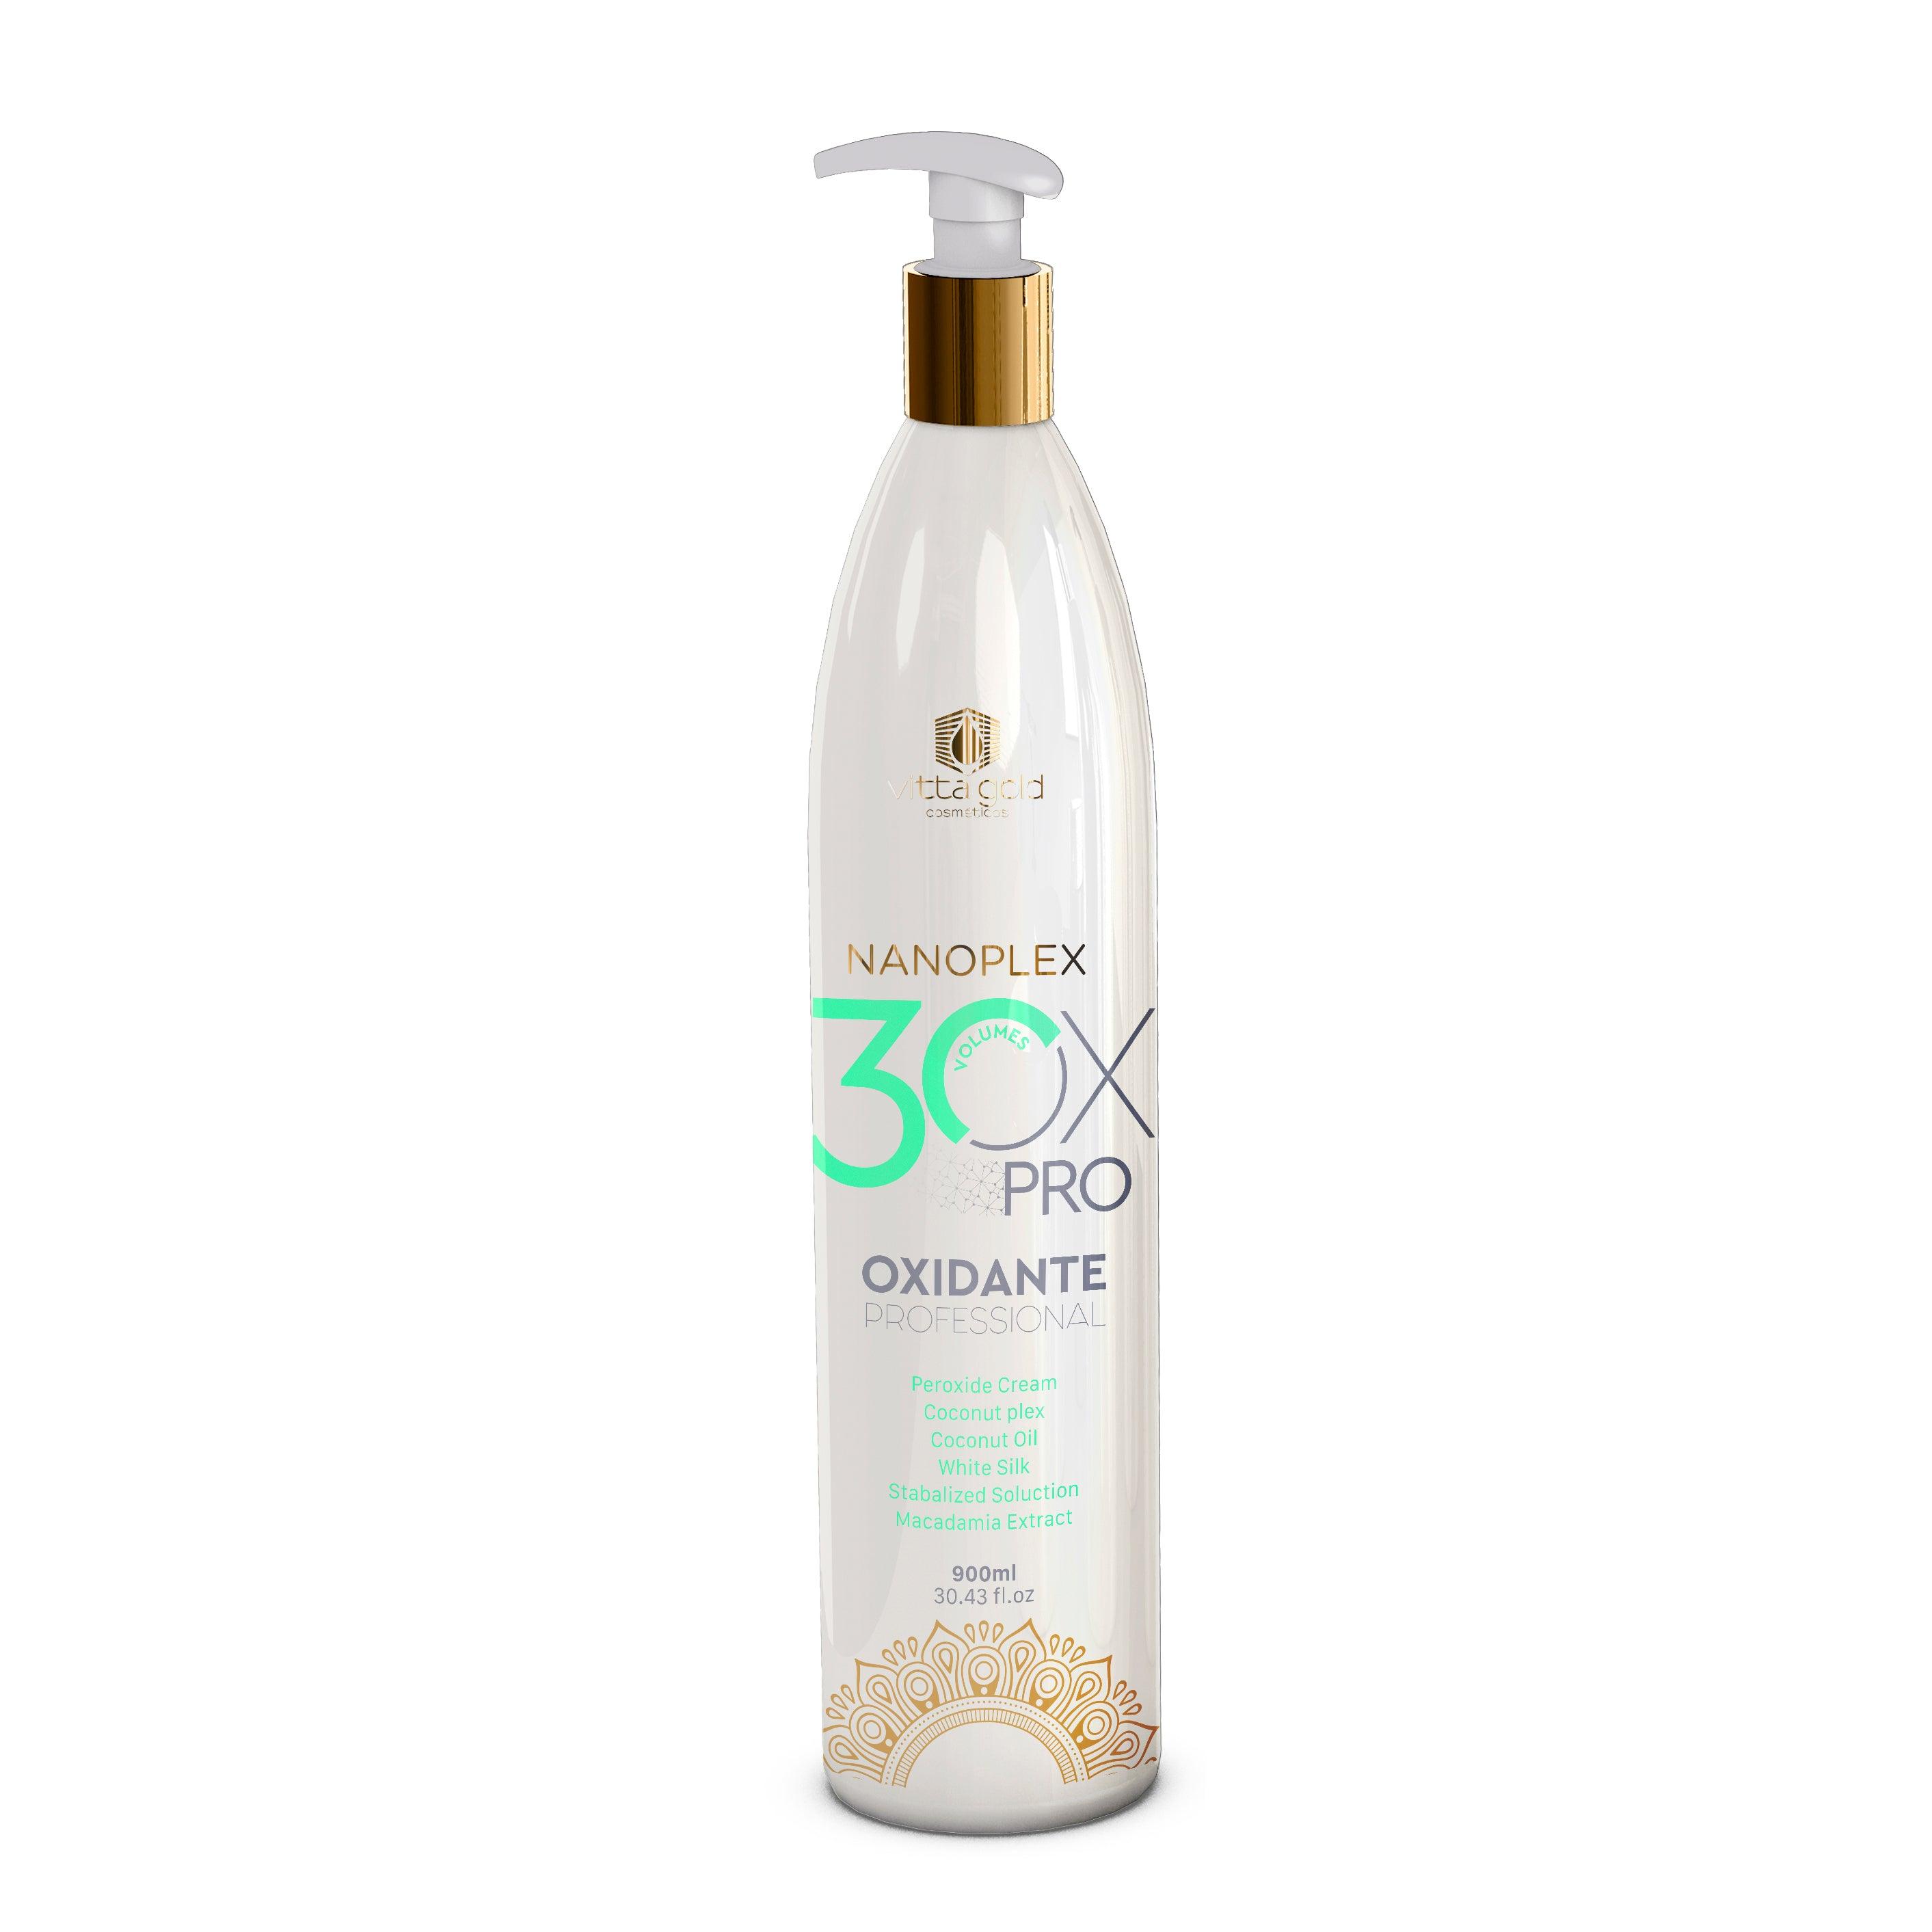 Nanoplex Peroxide Cream OX - 30vol. Professional Hair Oxidizing-Proxide Cream-Vitta Gold